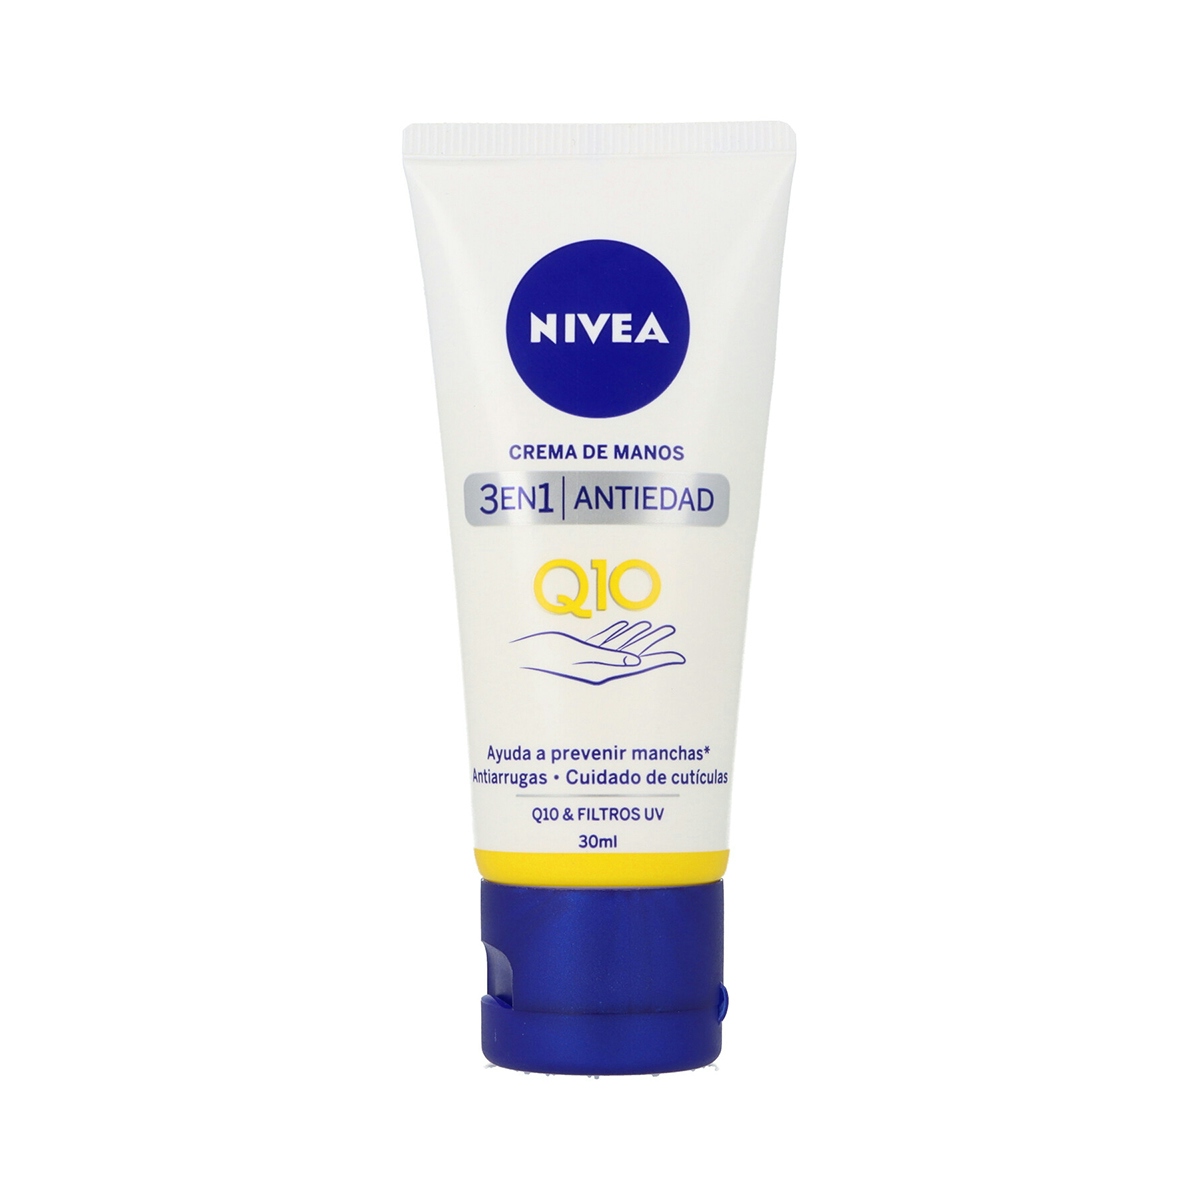 Crema de manos anti-age Q10 Nivea NIVEA 30 ml